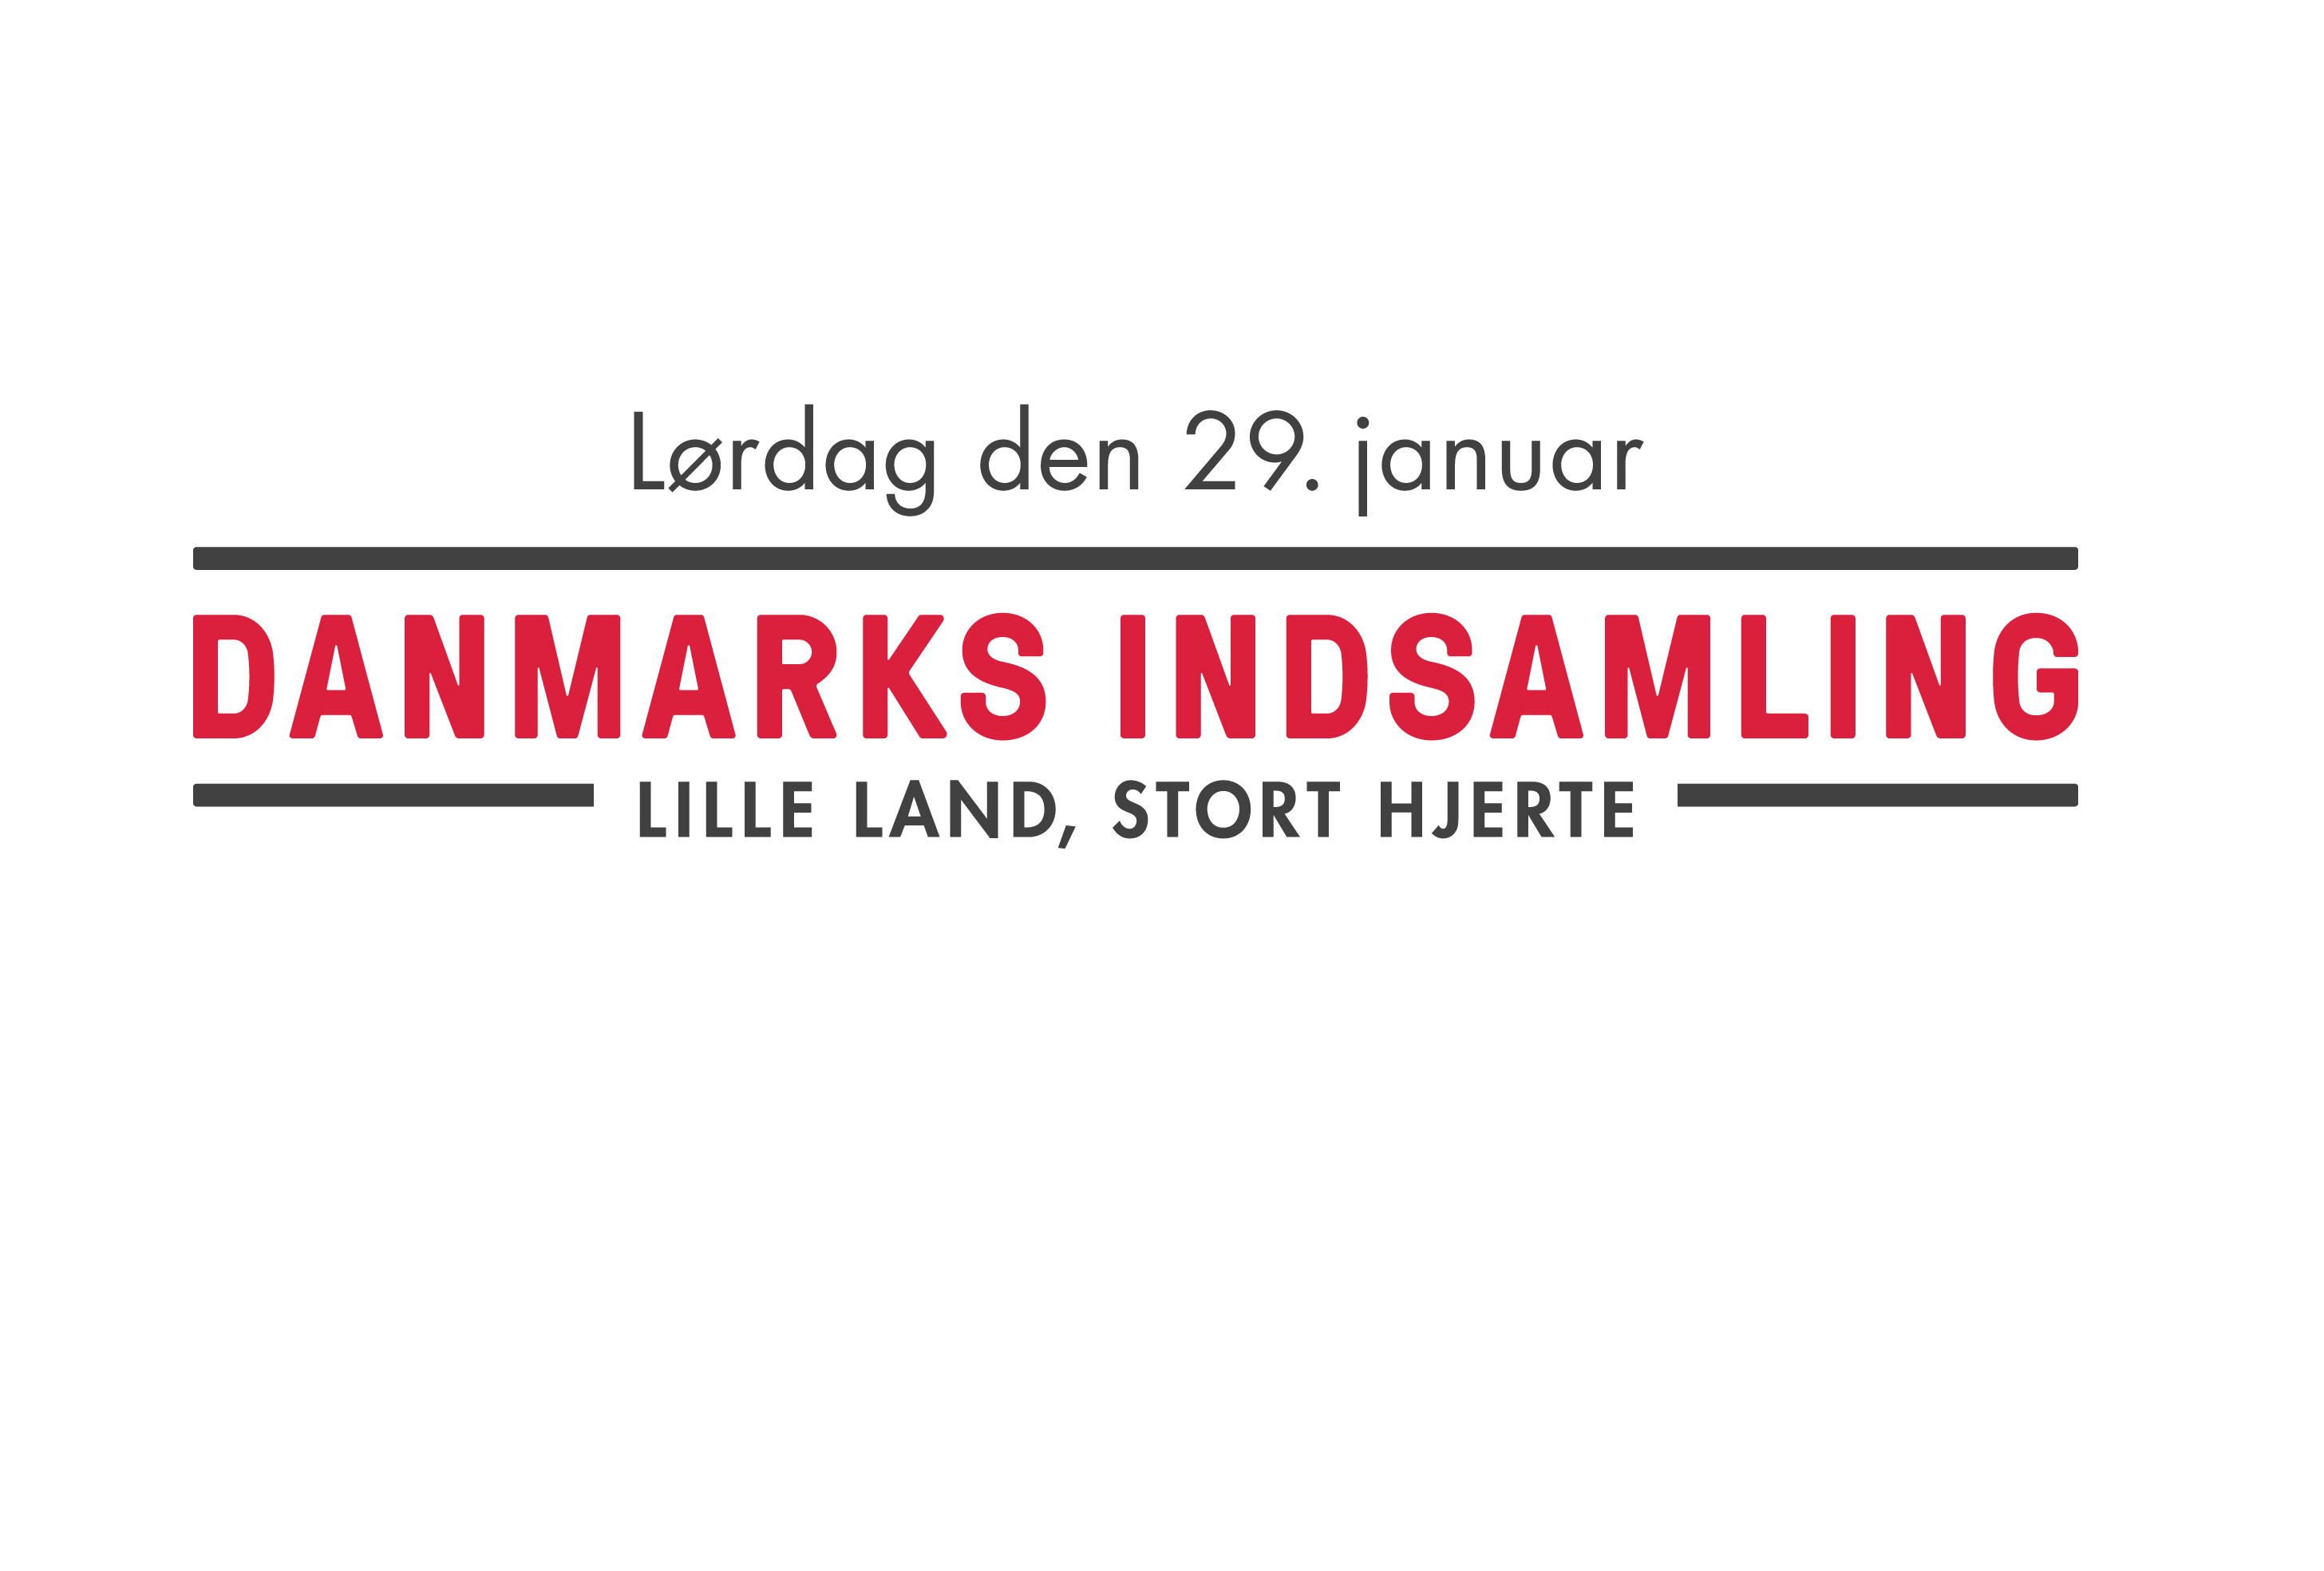 AVK supporting the Danmarks Indsamling